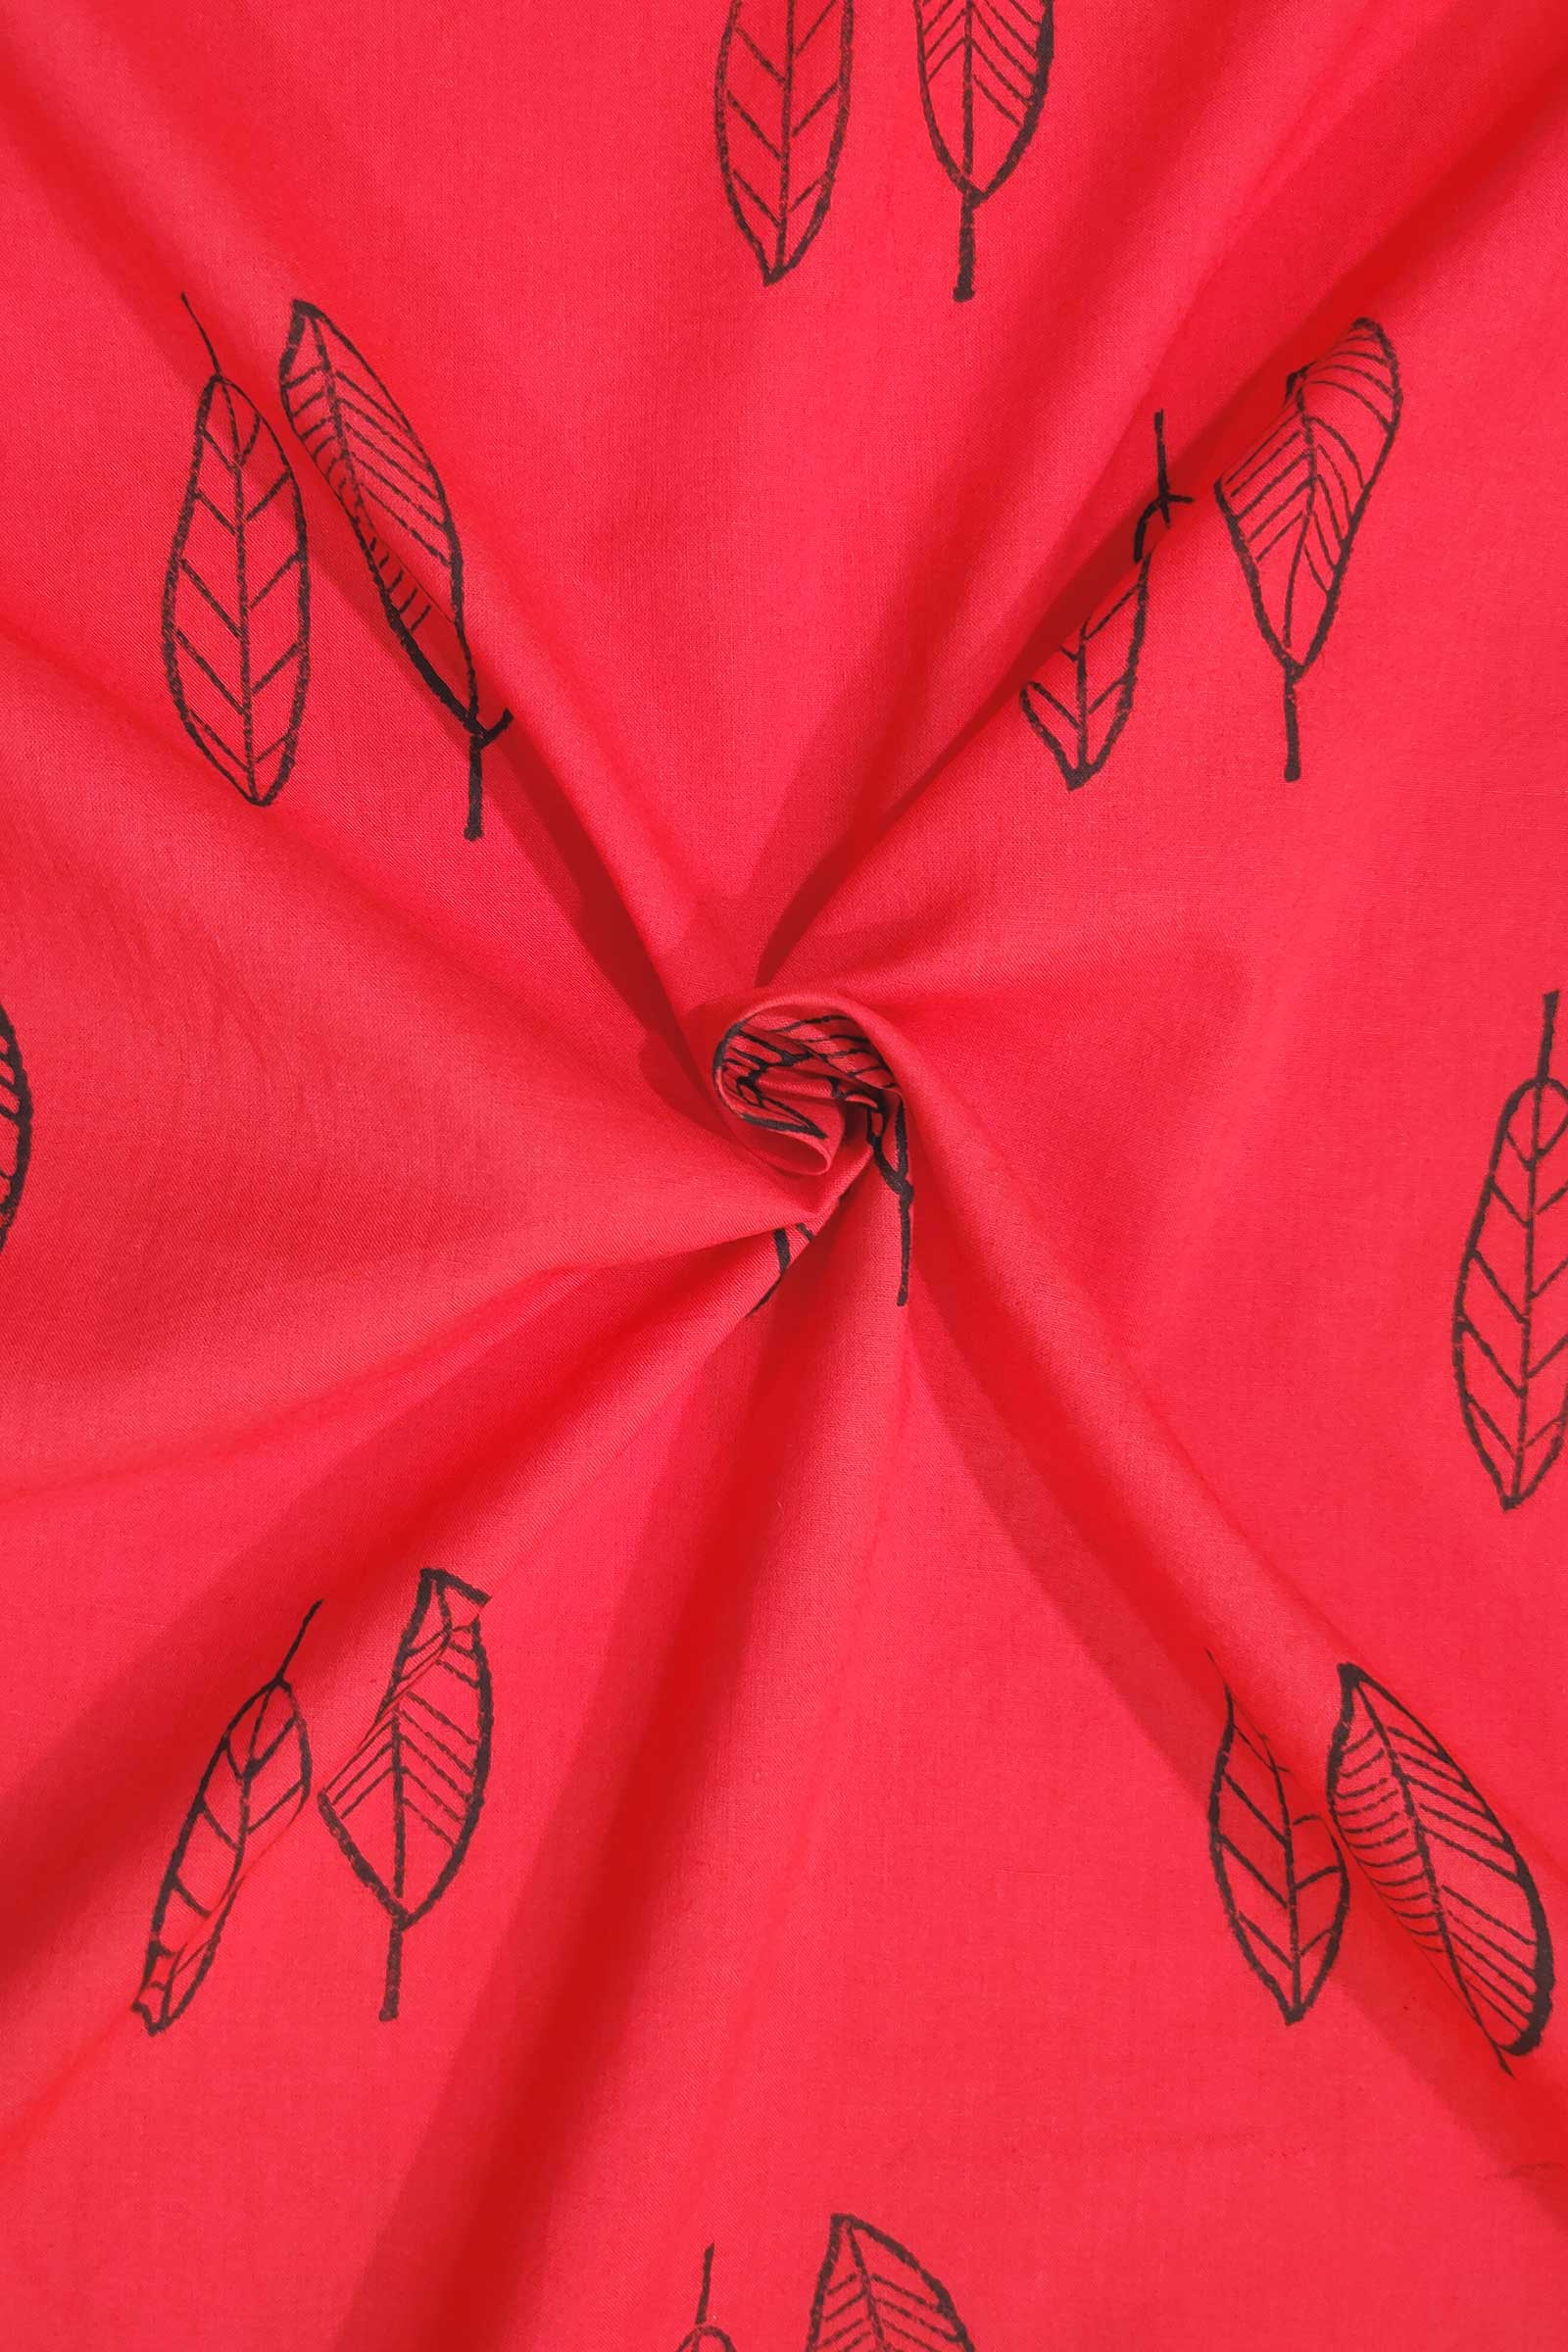 Chippa Hand Block Printed Cotton Fabric With Black Leaf Motif  SKU- BS60005 - Bhartiya Shilp